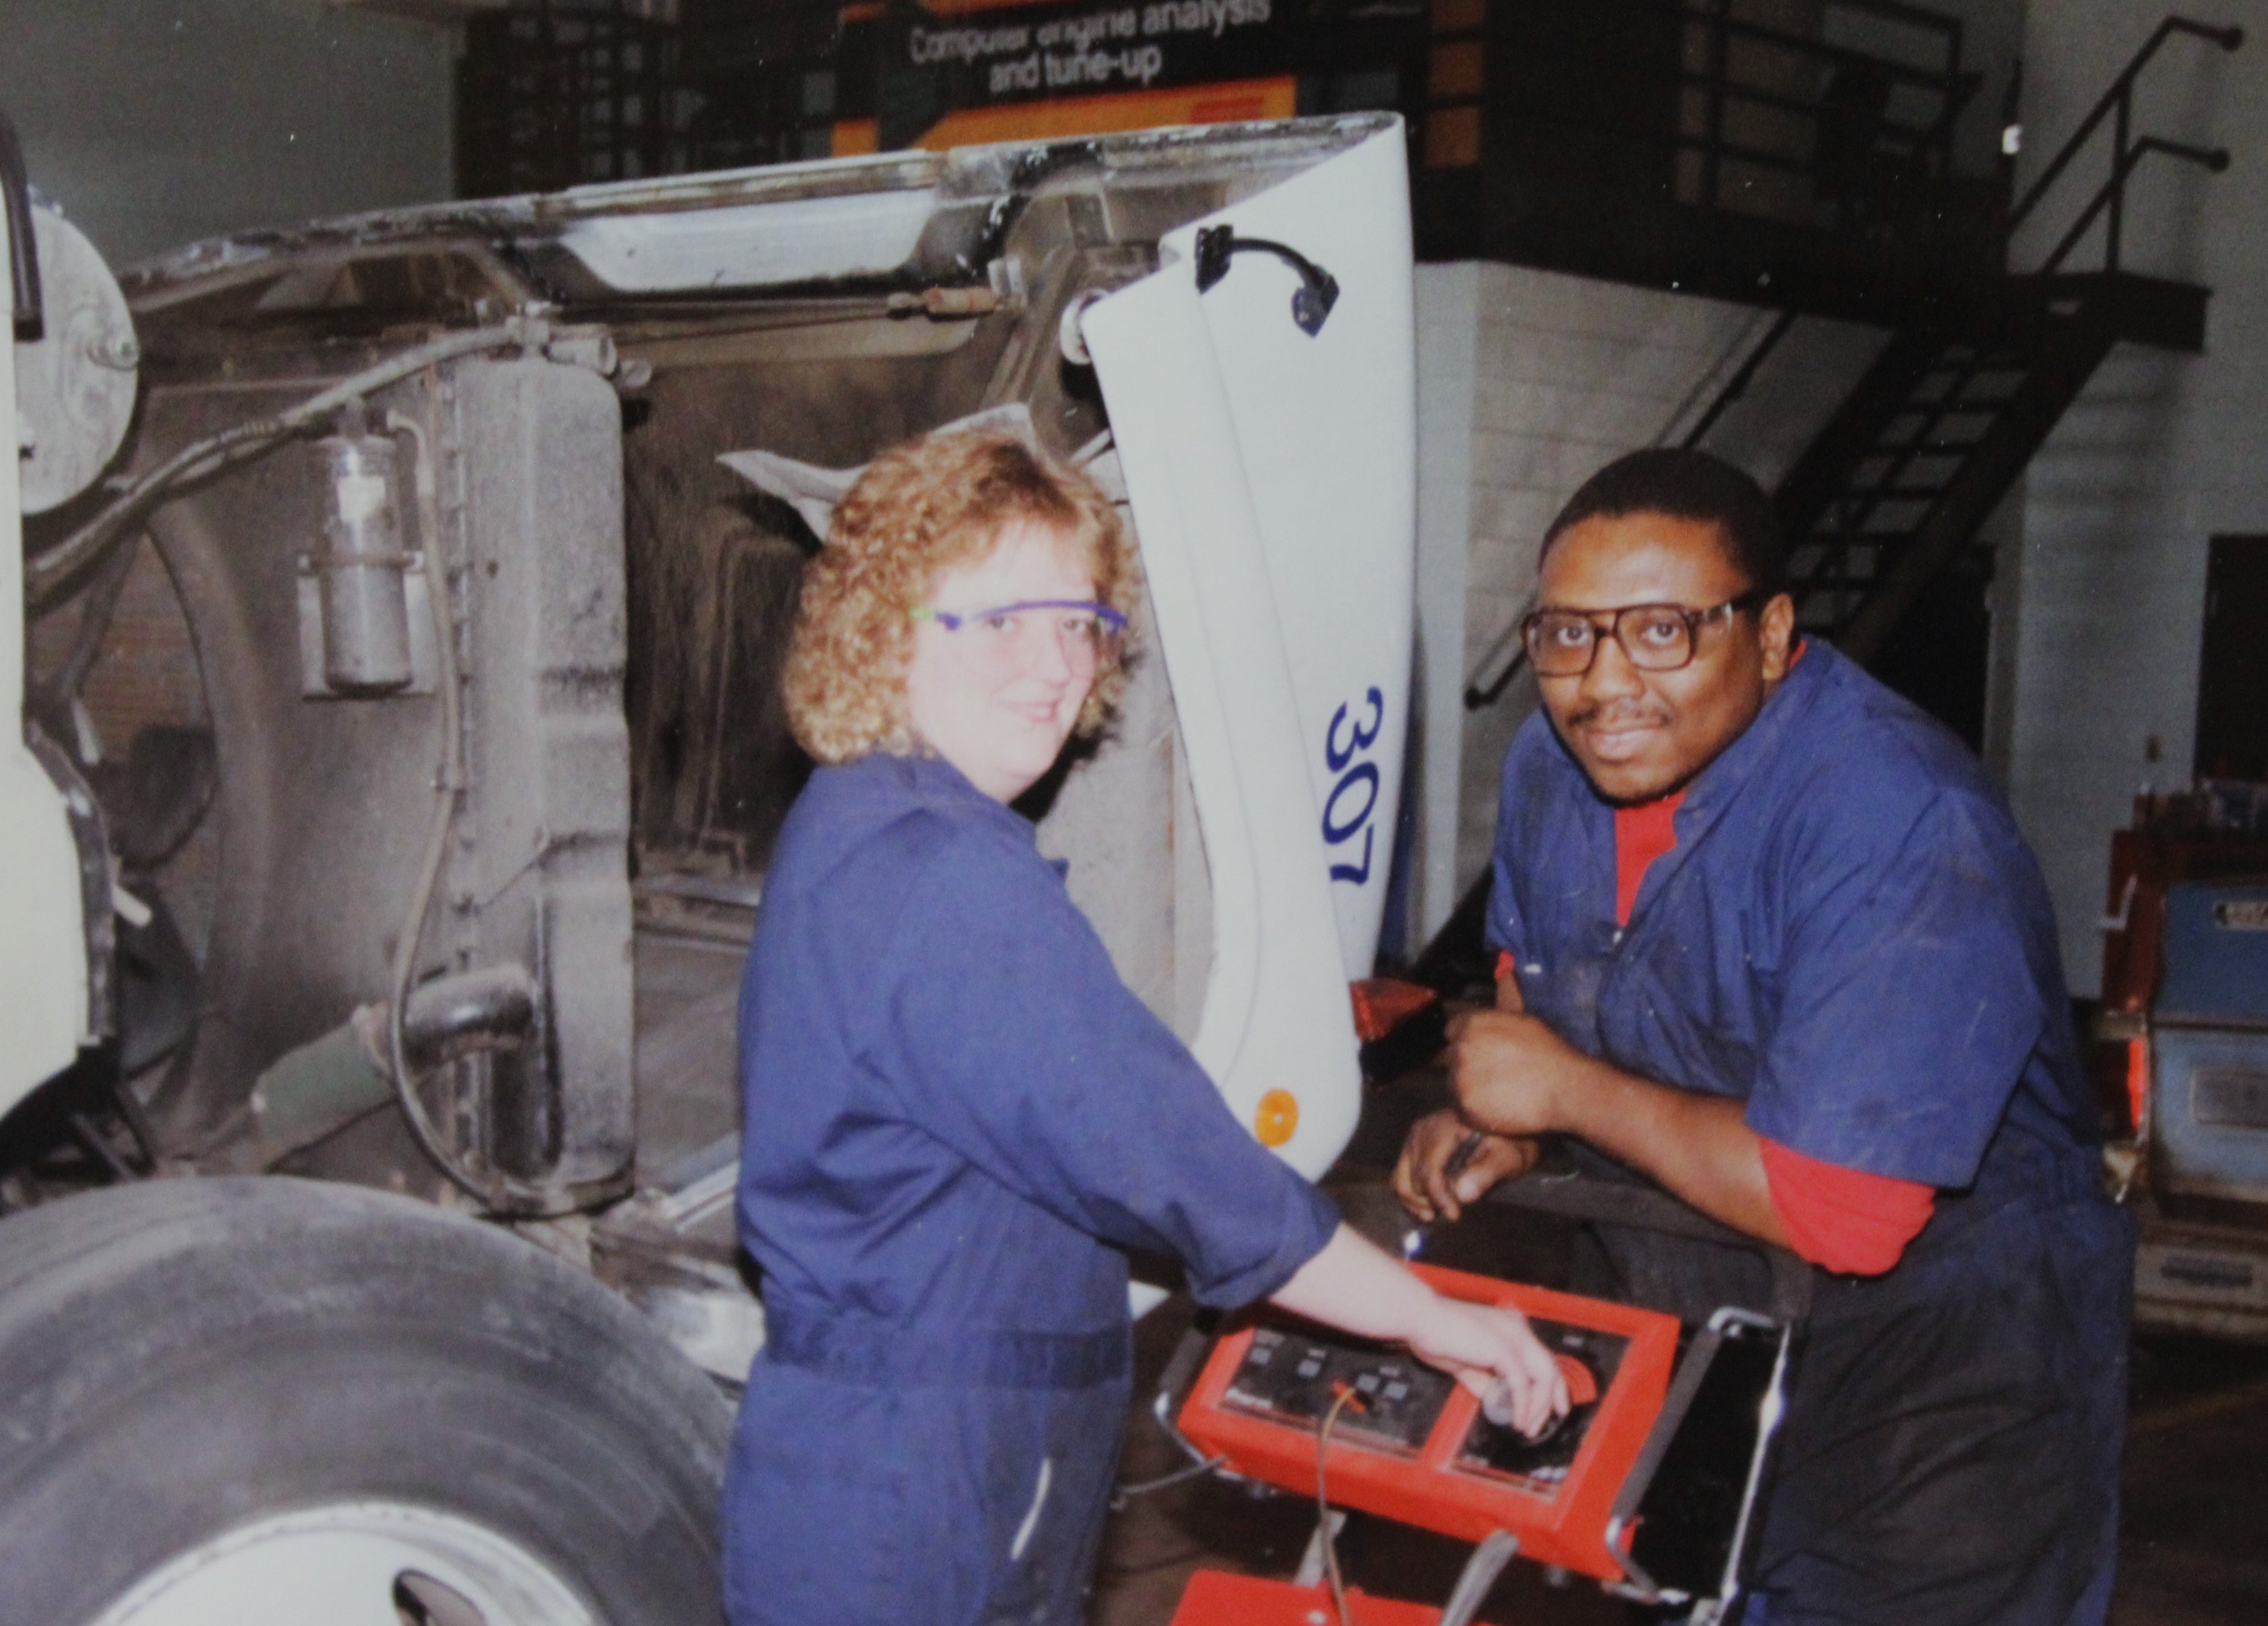 The Auto Service Tech classroom in Moorhead, in 1995